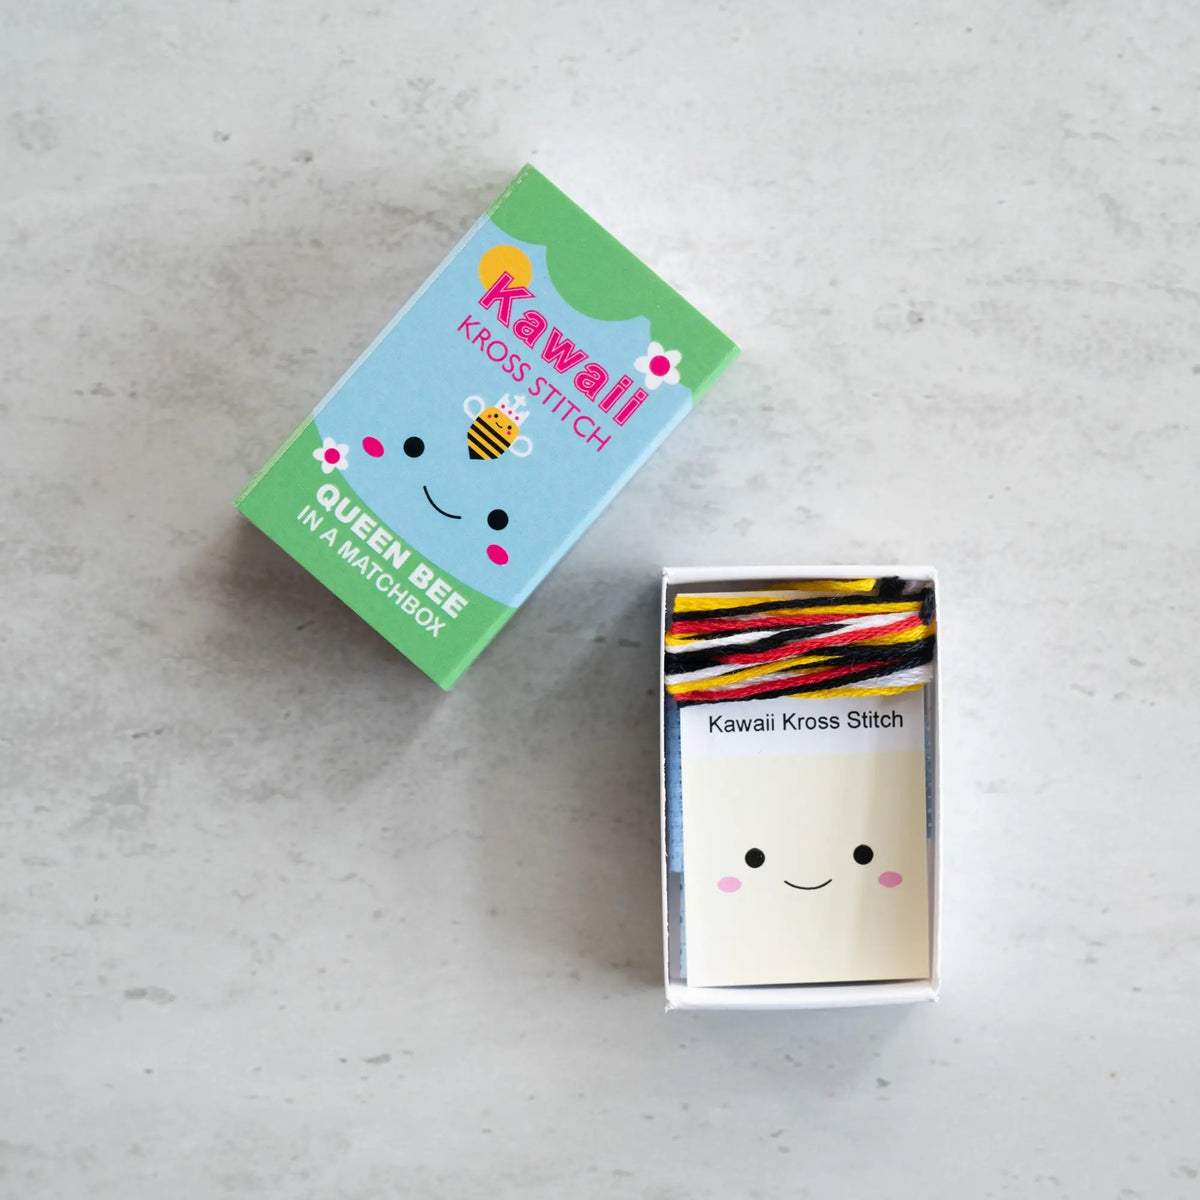 Kawaii Queen Bee Mini Cross Stitch Kit in a Matchbox